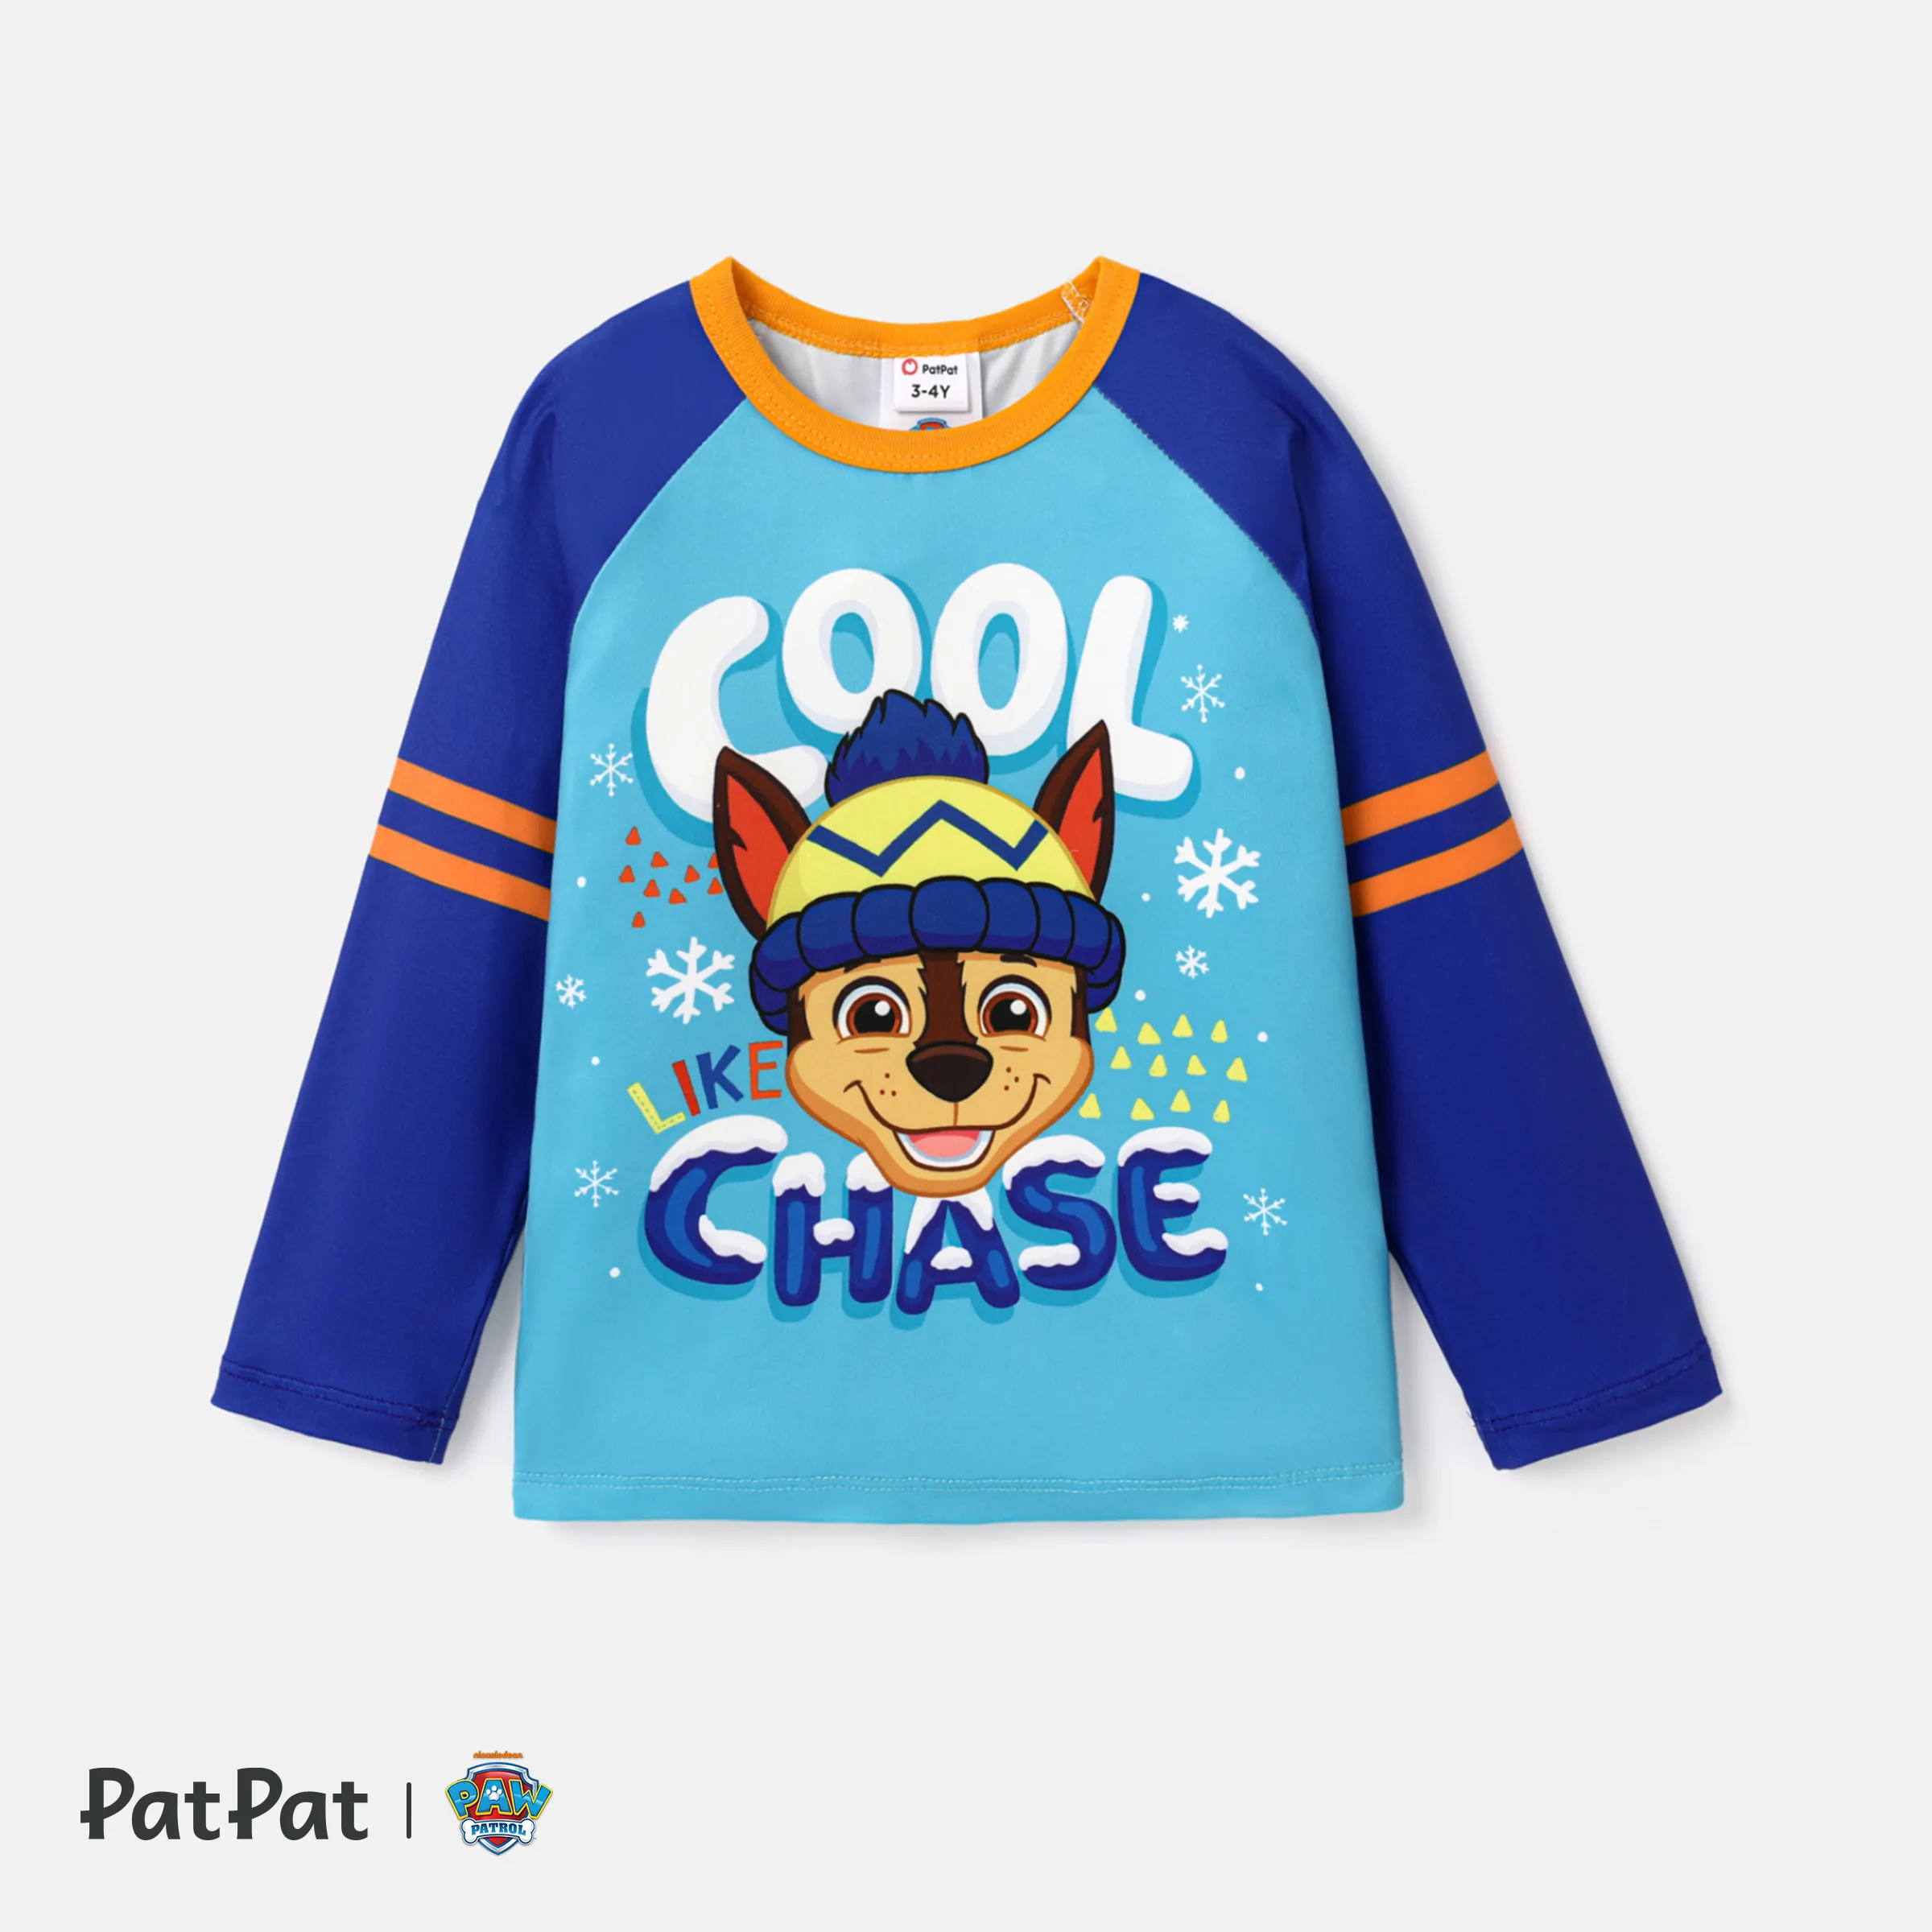 PAW Patrol Toddler Girl/Boy Character Print Long-sleeve Pullover Sweatshirt